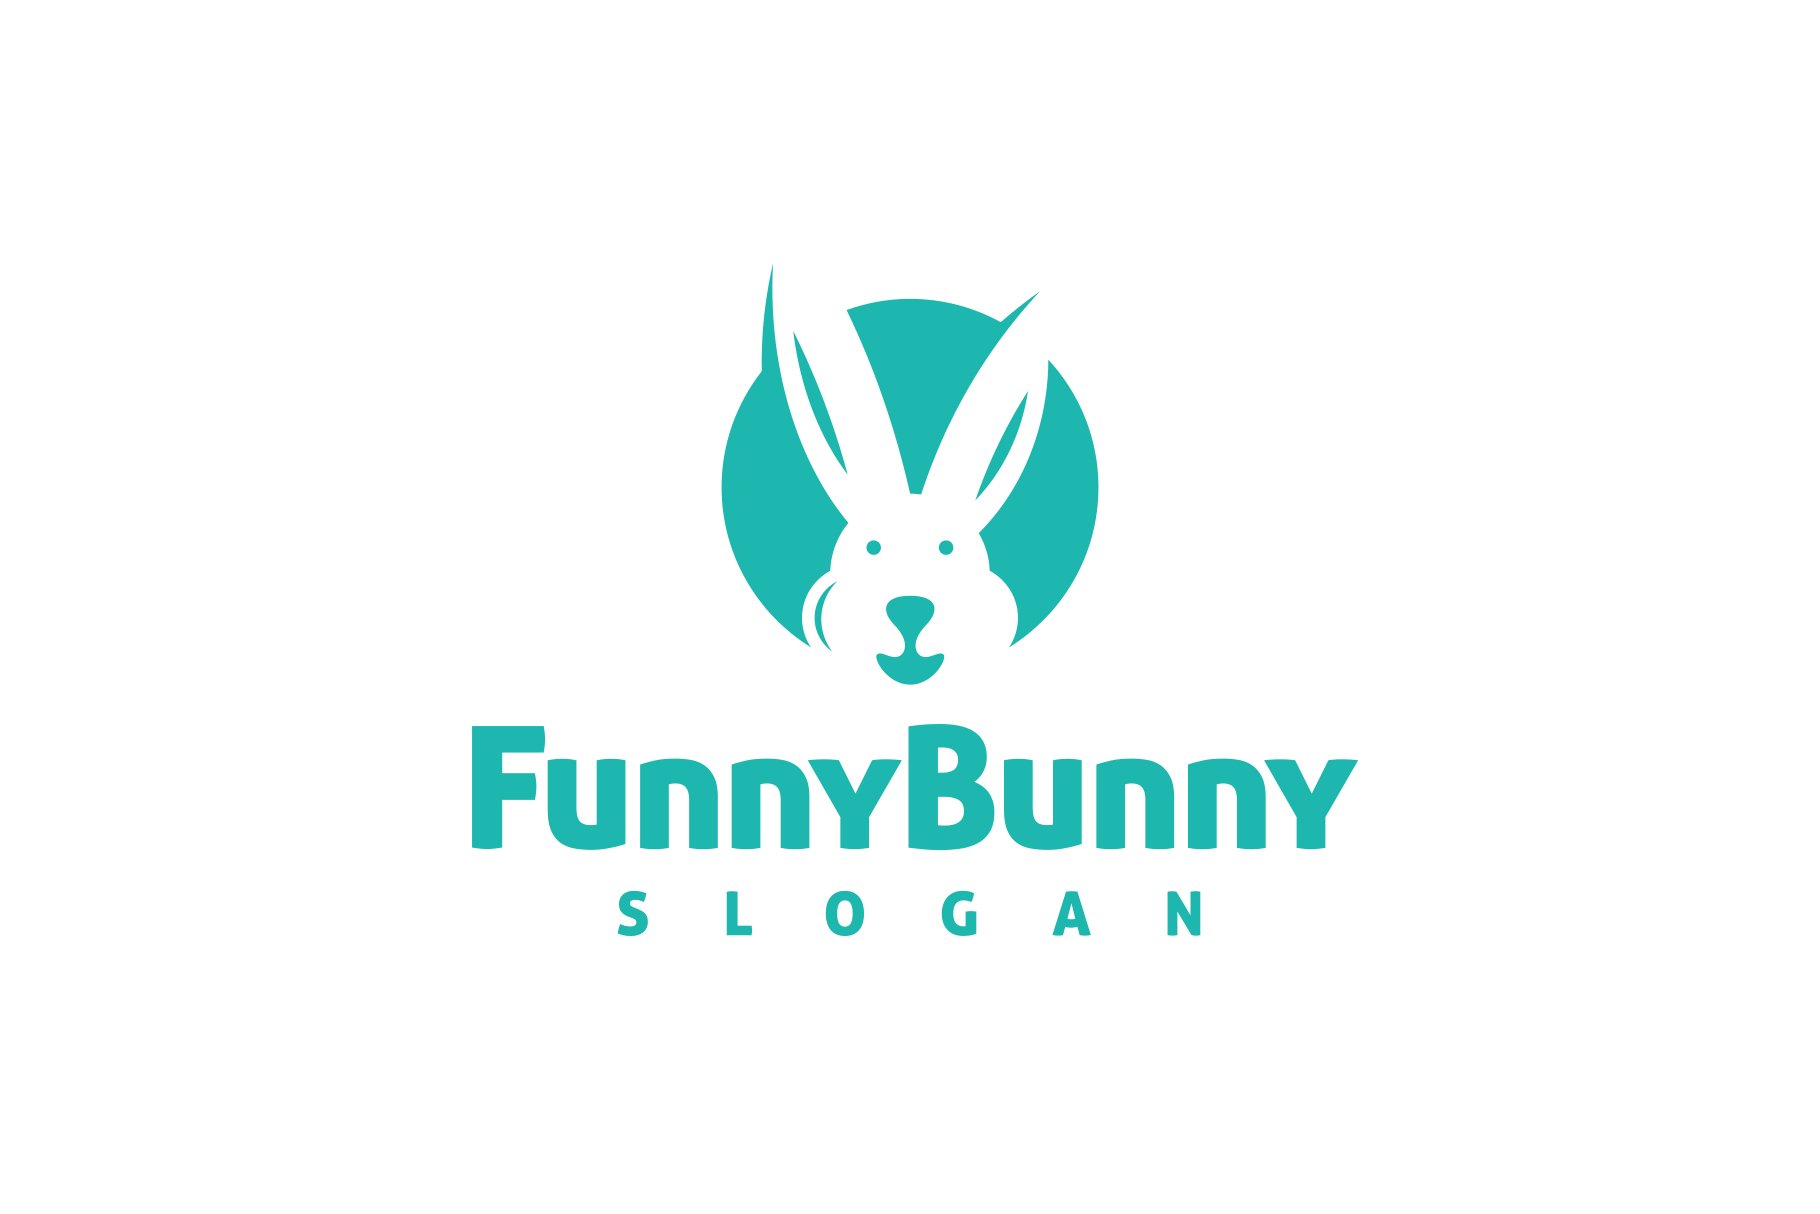 Playful Funny Bunny Logo Animal Pet cover image.